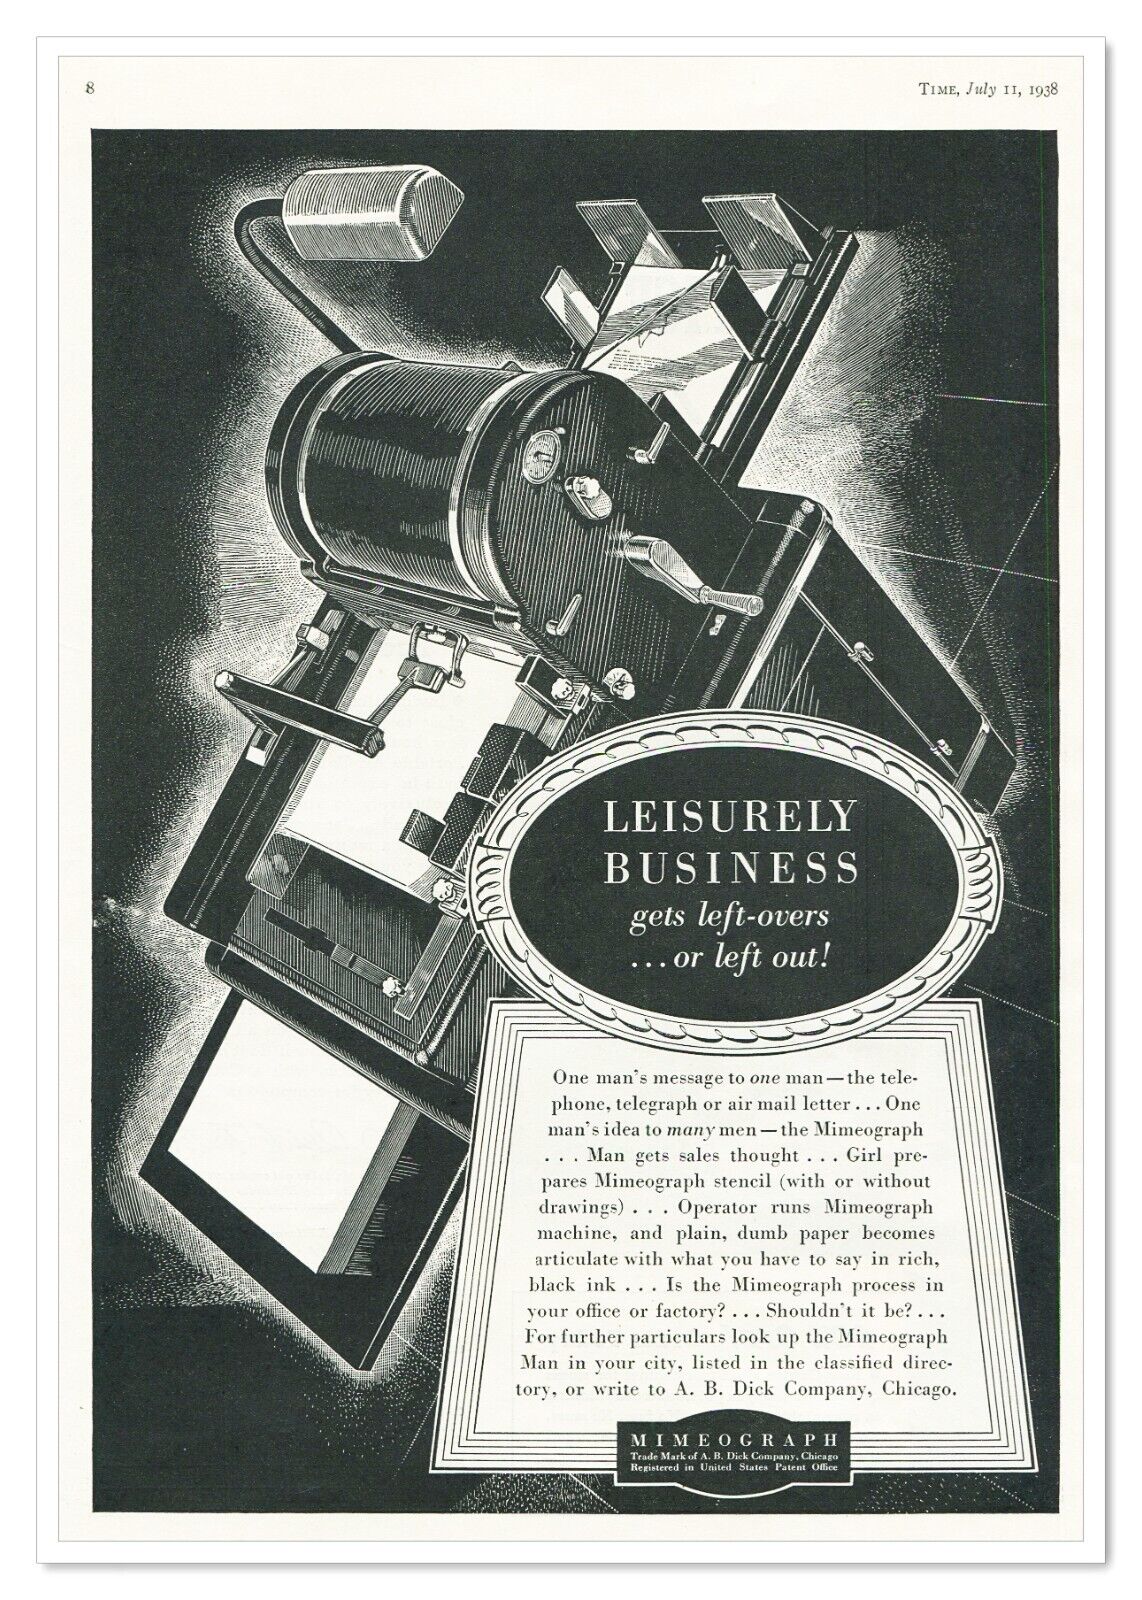 Print Ad Mimeograph Copying Machine A.B. Dick Co Vintage 1938 Advertisement